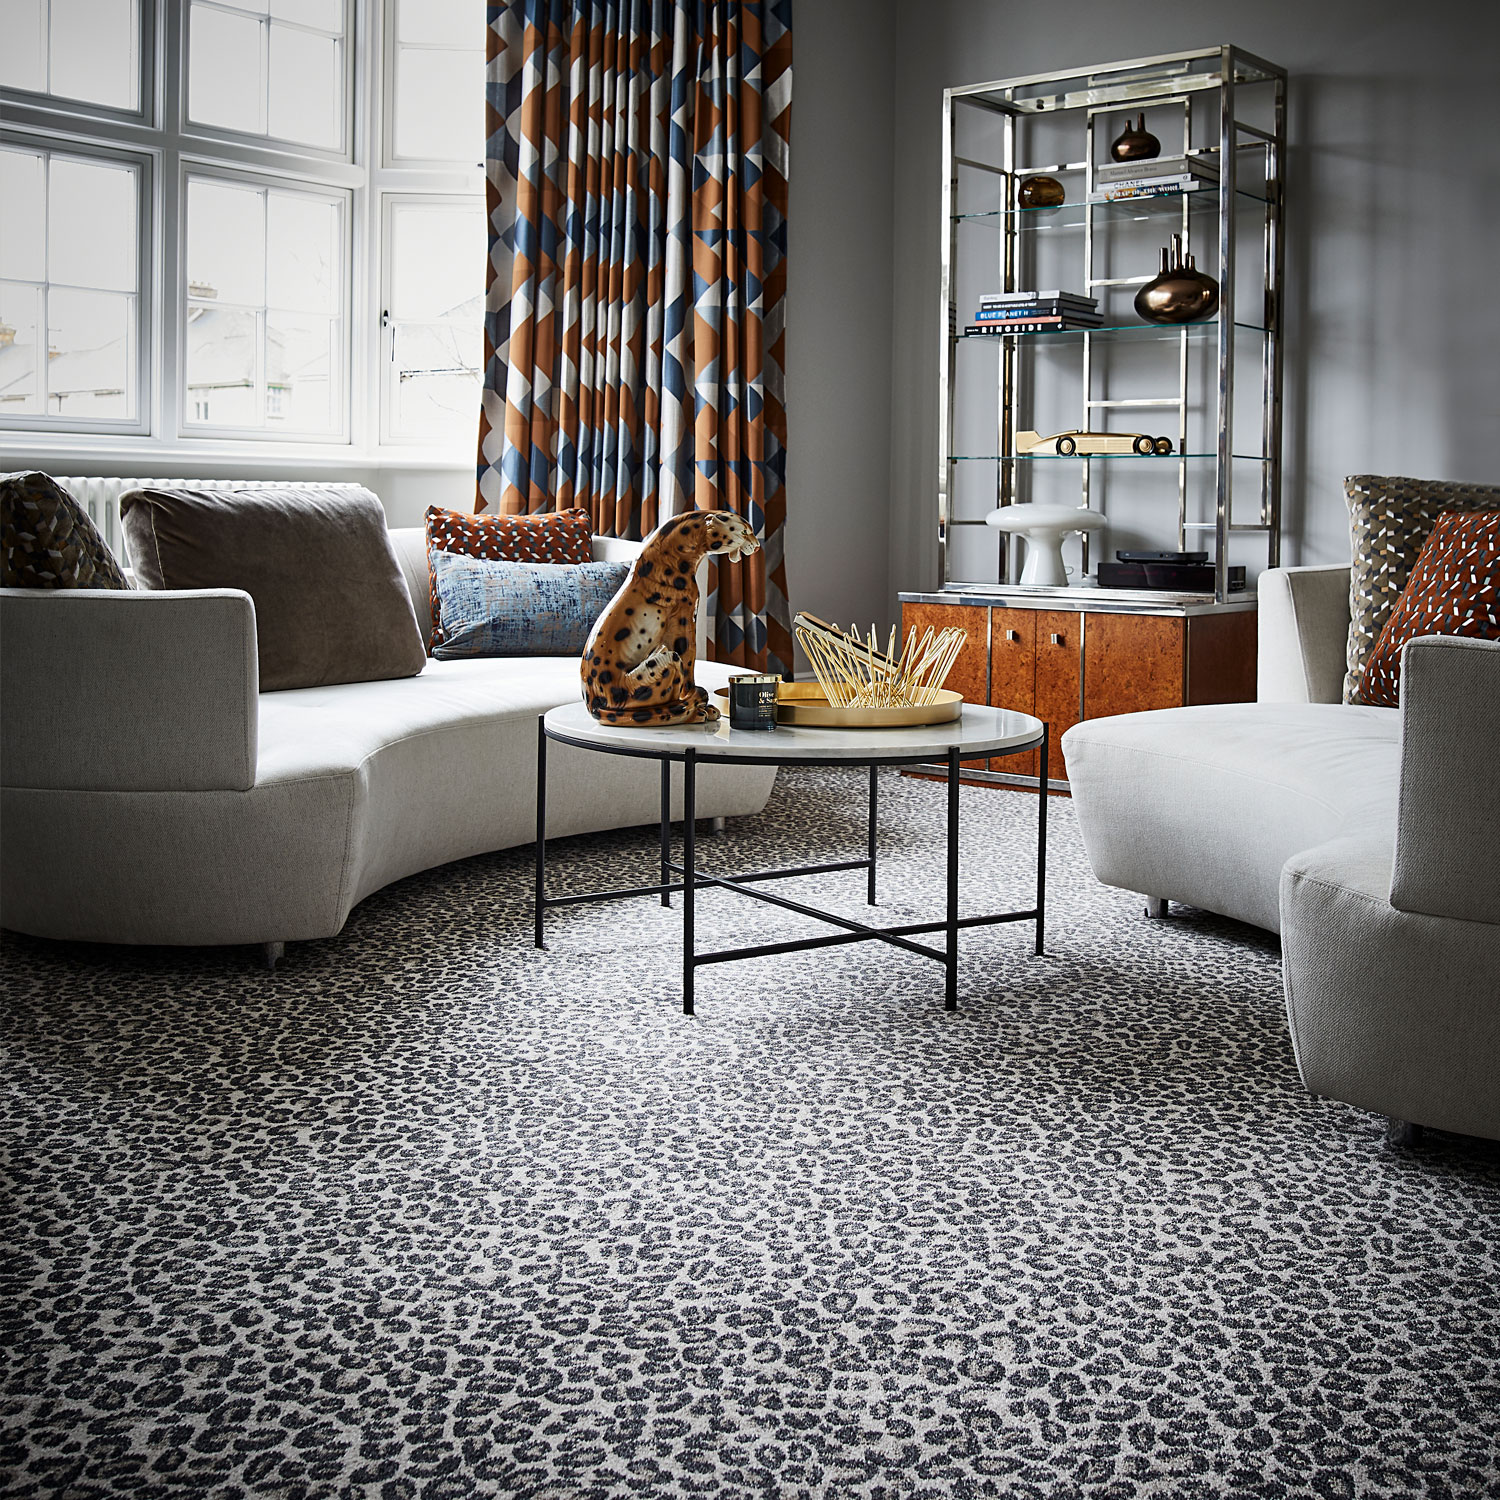 Vibrant geometric pattern in a bold carpet